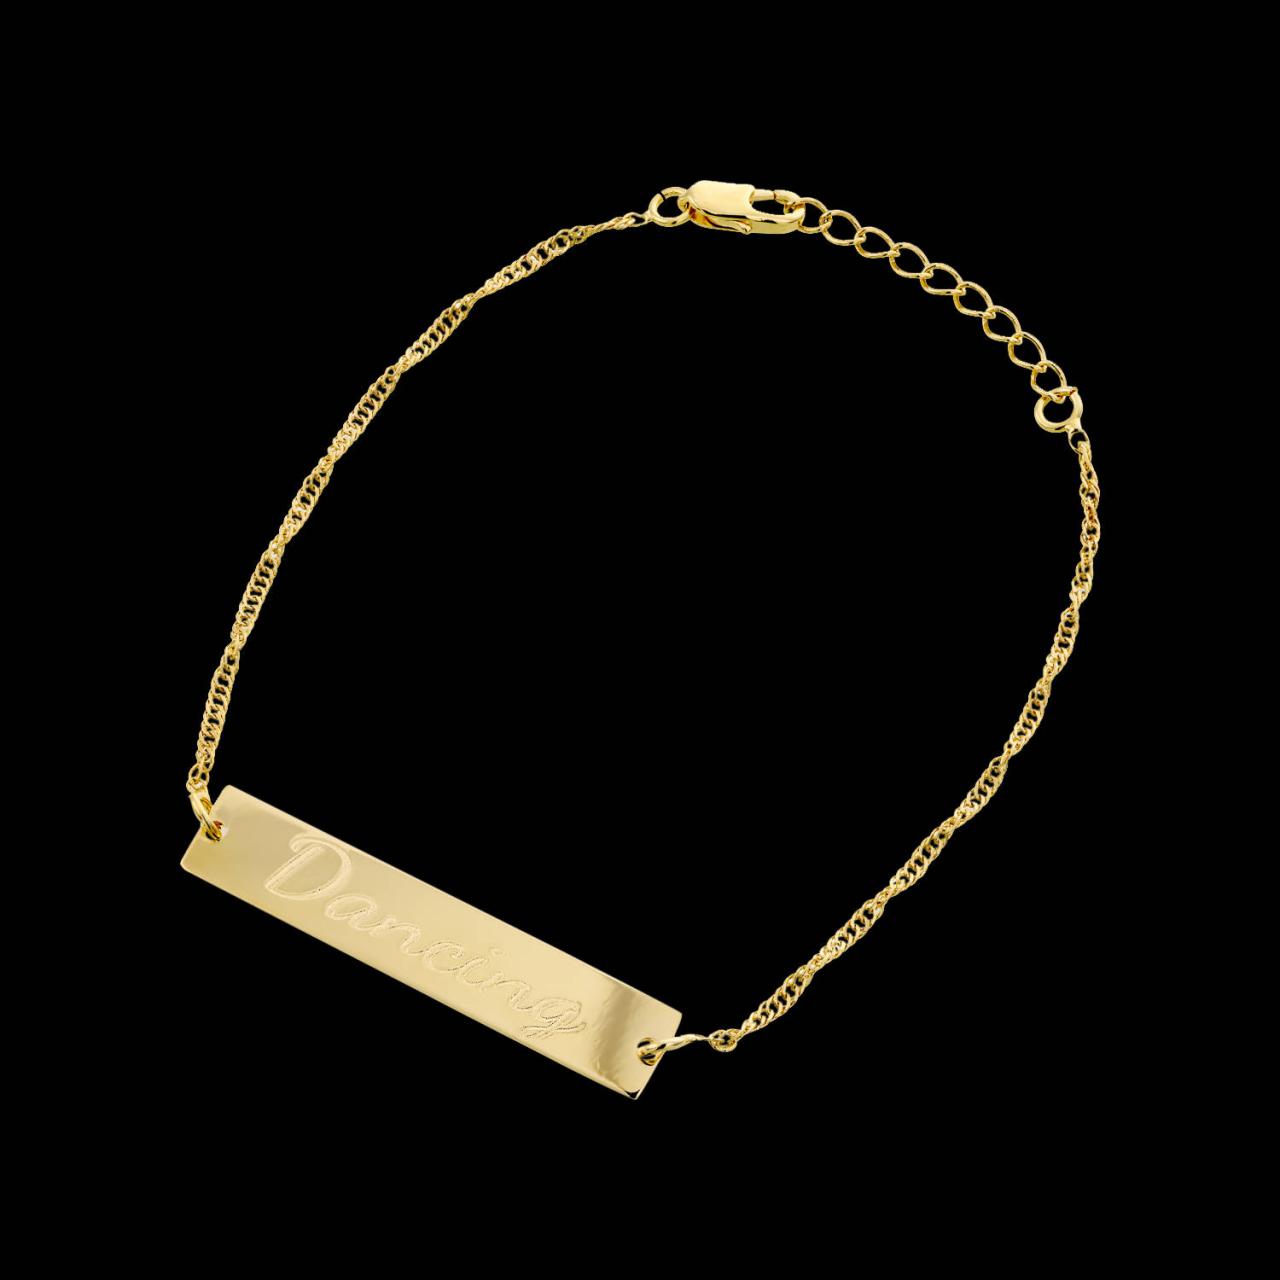 Personalized Bracelet - Custom Bracelet - Engraved Bracelet - Personalized Jewelry - Personalized Gift - Personalized Name Bracelet - Gold Name